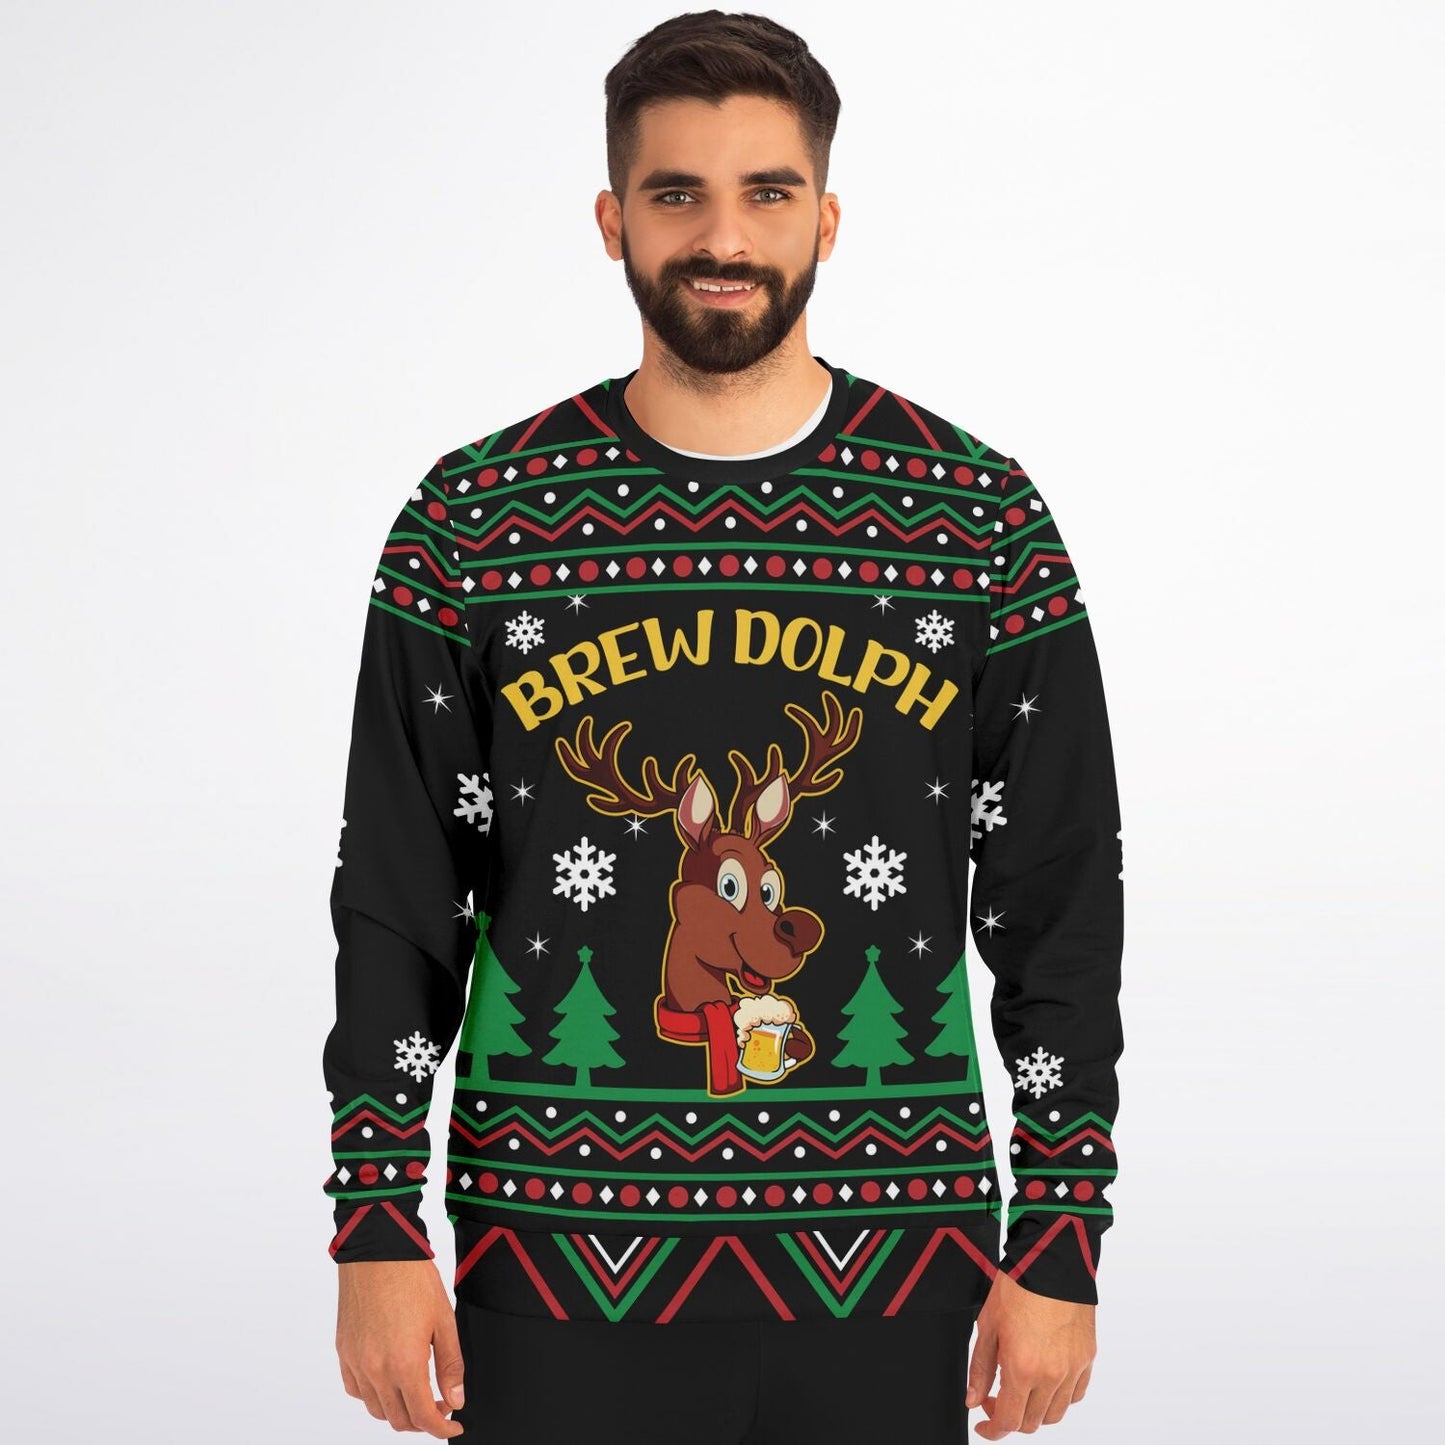 Brewdolph Ugly Christmas Sweatshirt Fashion Sweatshirt - AOP Subliminator 